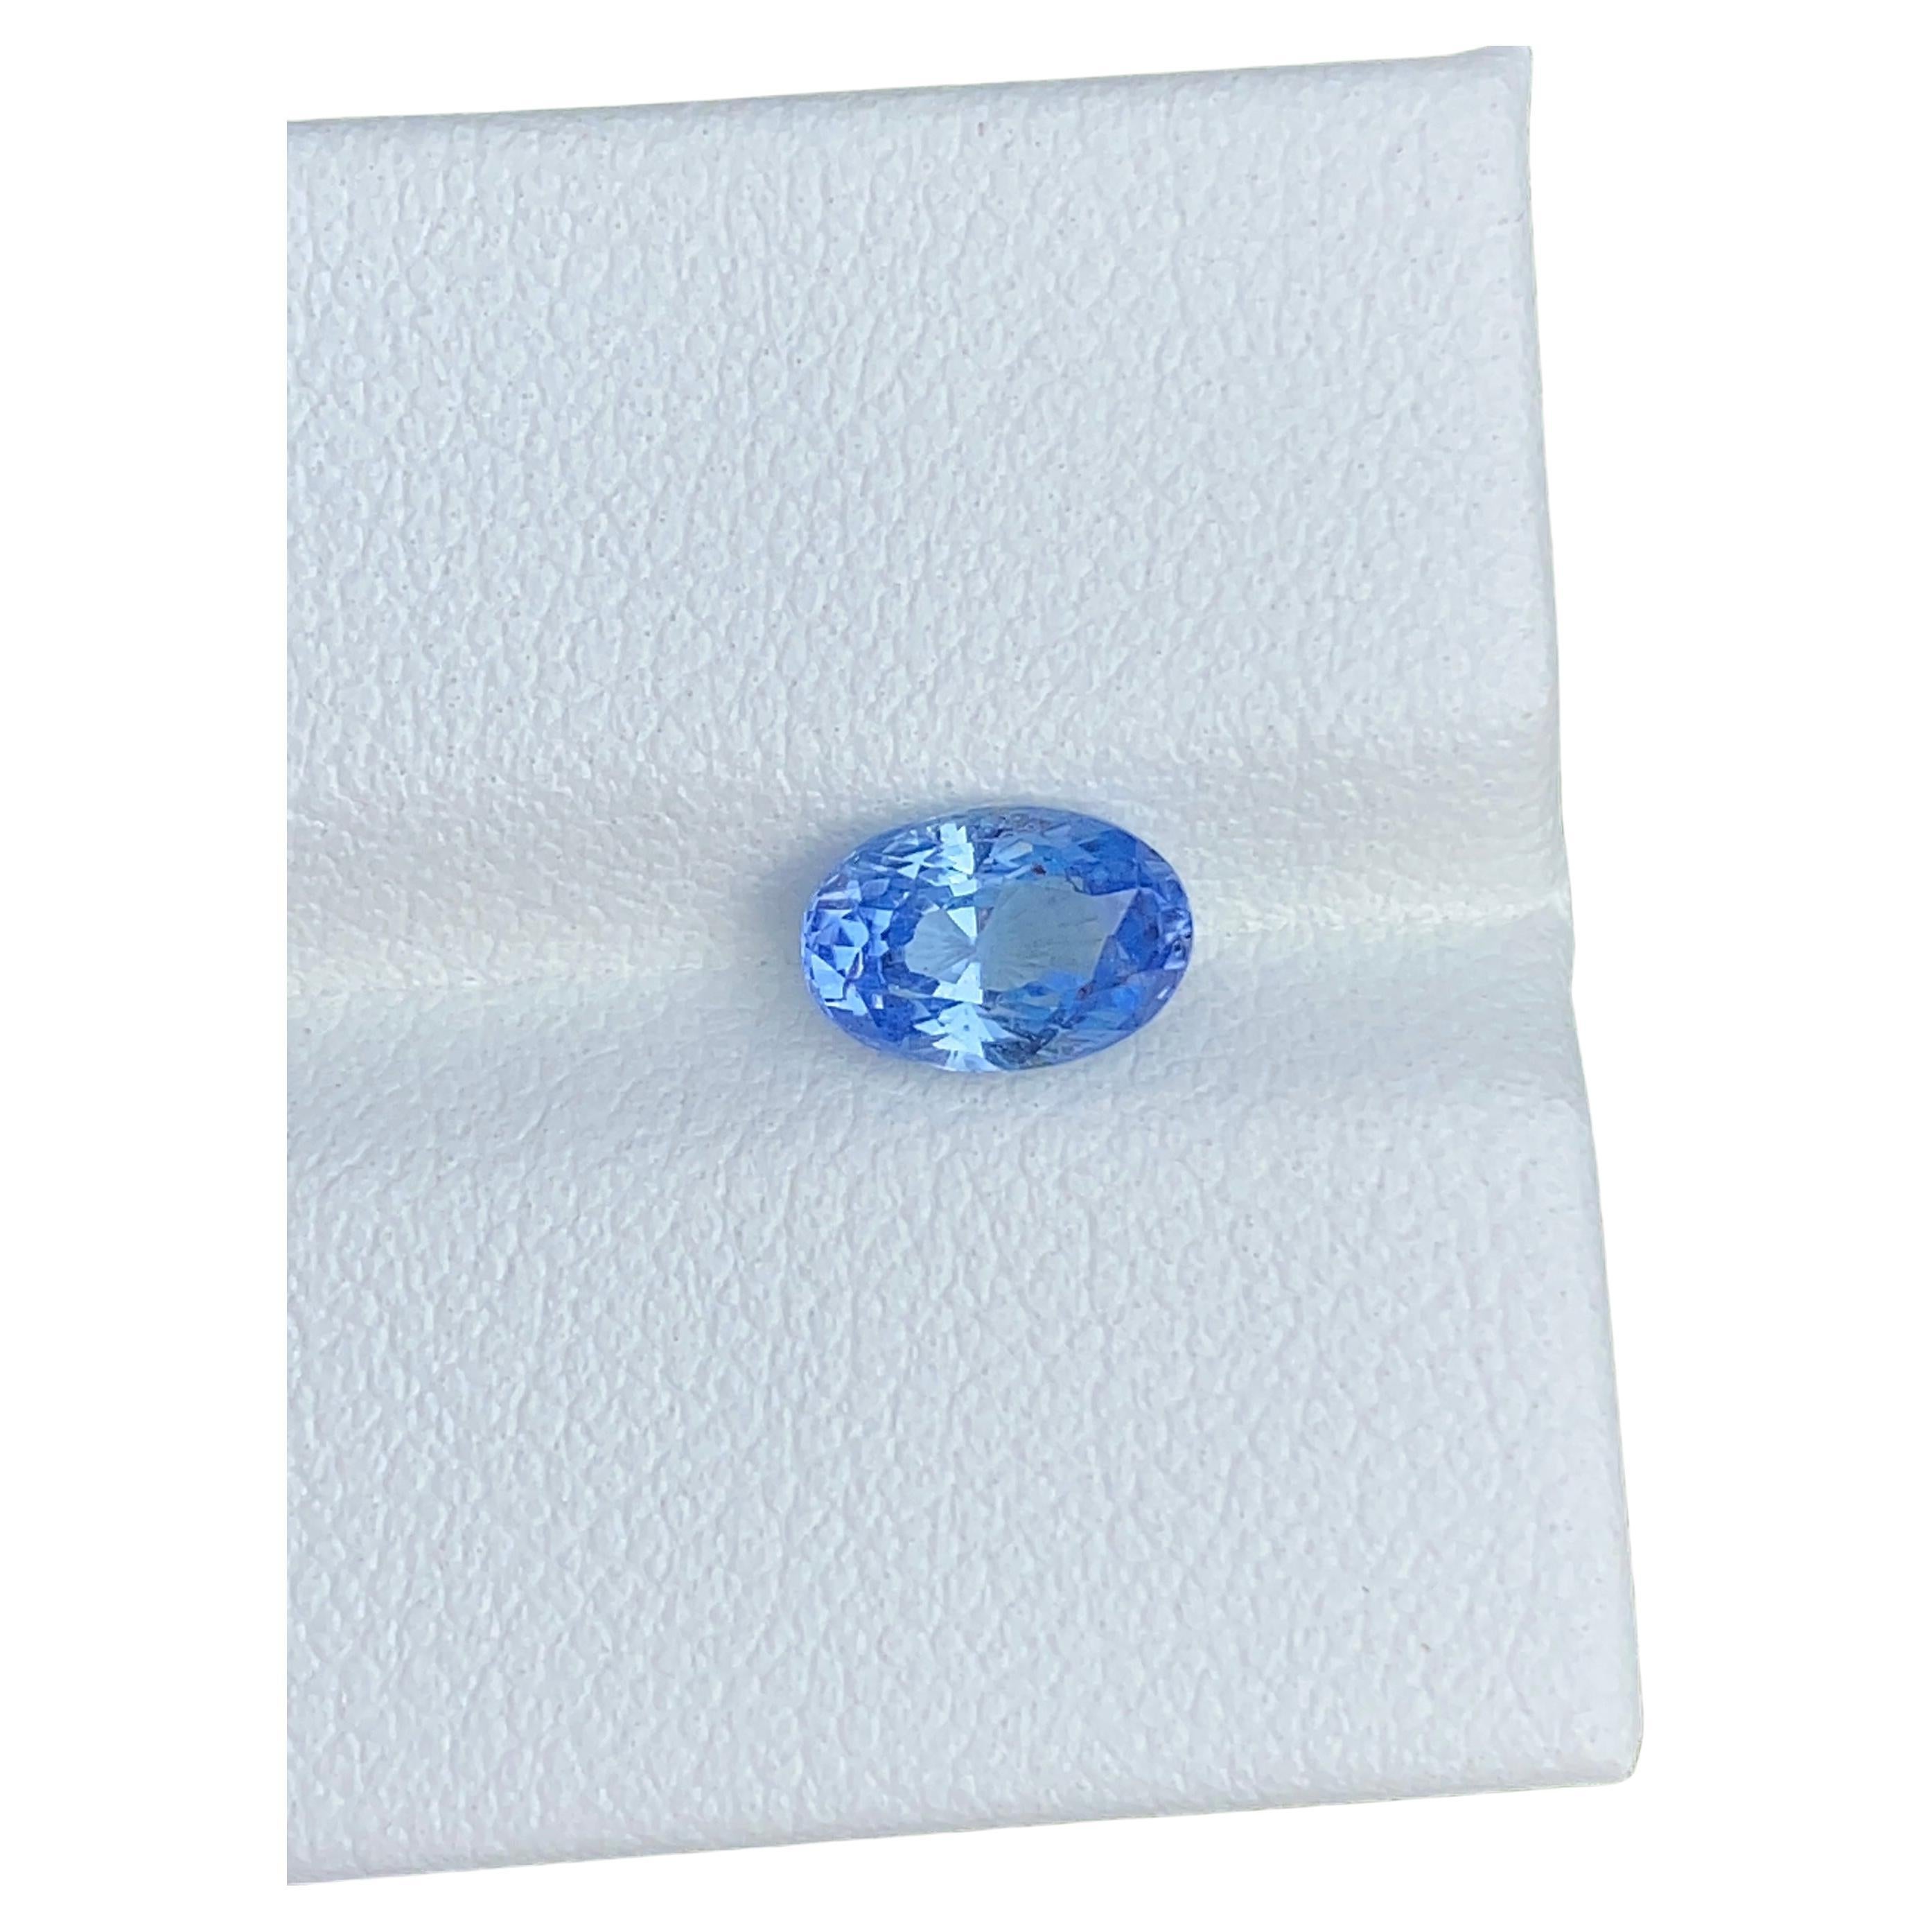 Certified Unheated Blue Sapphire Ring Gem 1.25 Carat Oval Gemstone Ceylon Origin For Sale